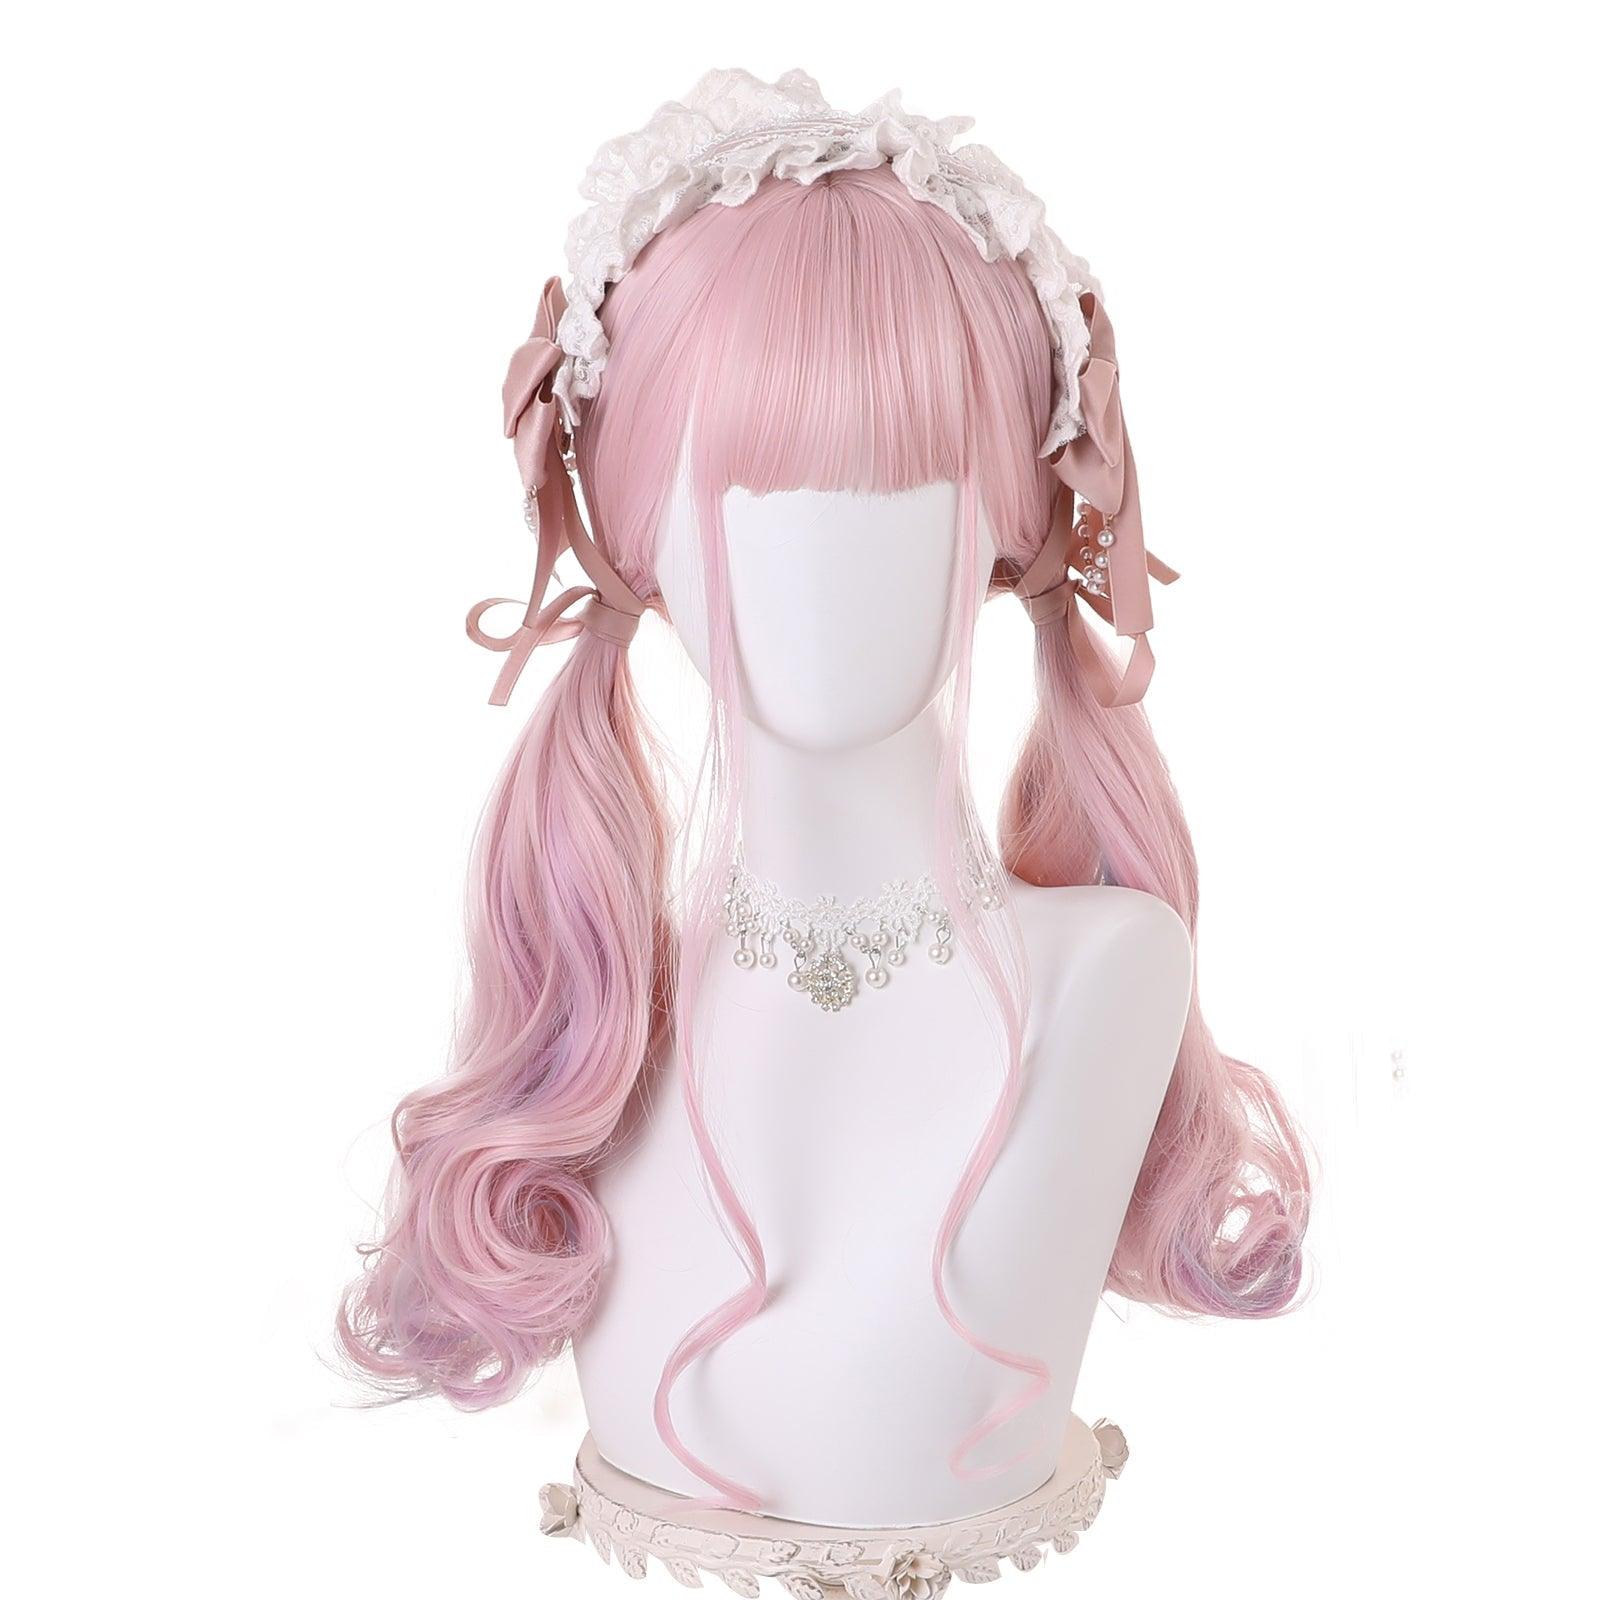 coscrew Rainbow Candy Wigs Pink Long Lolita Wig LOLI-022 - coscrew